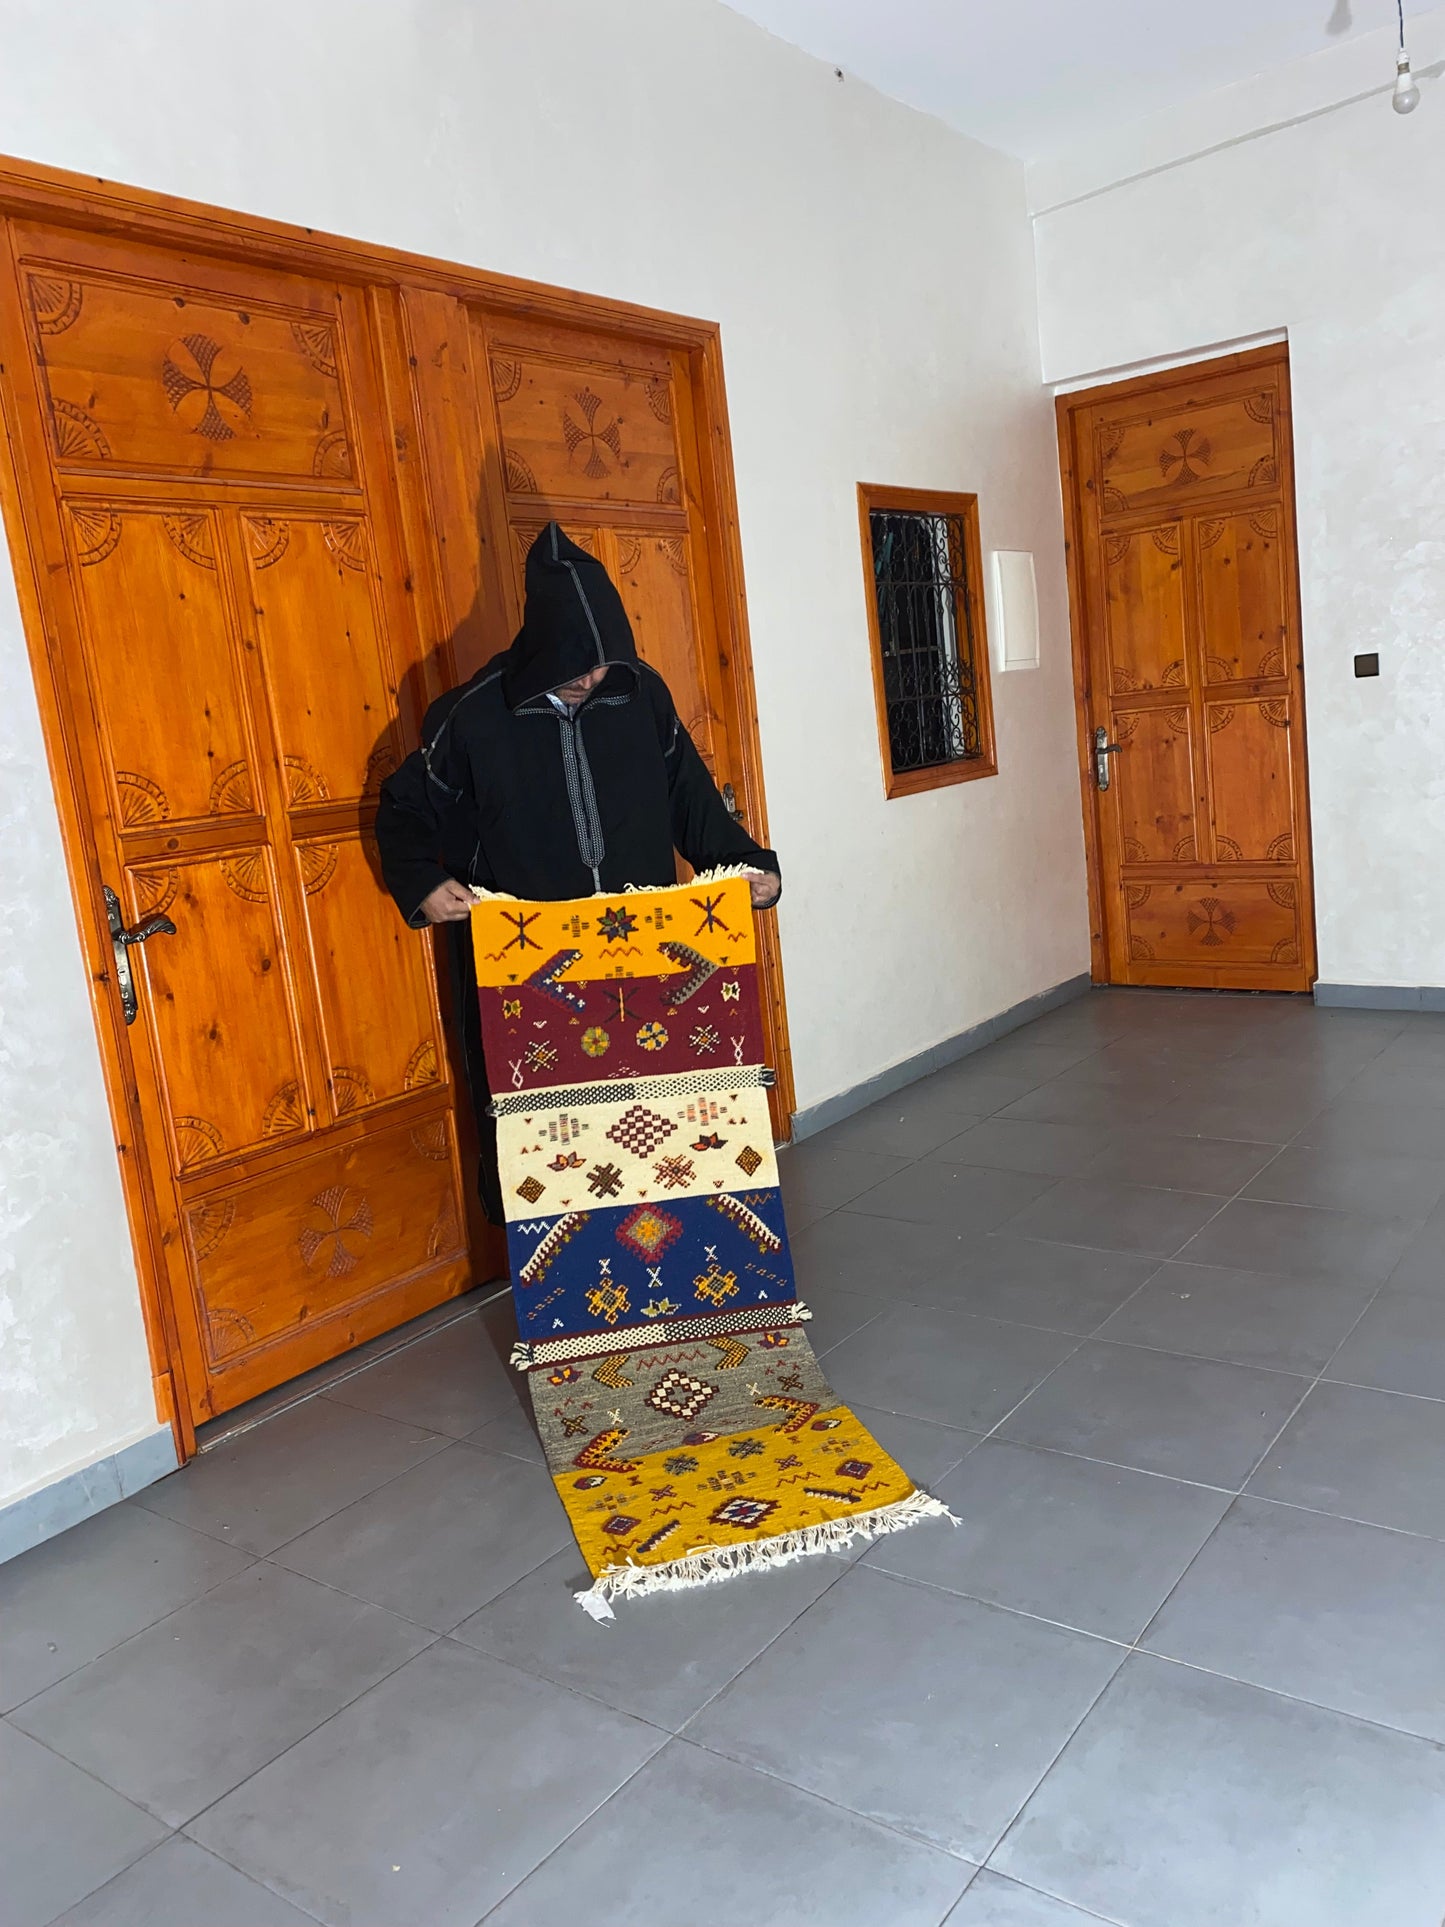 Moroccan  Kilim  handmade 100%wool berber  rugs size is 156x0,60 cm